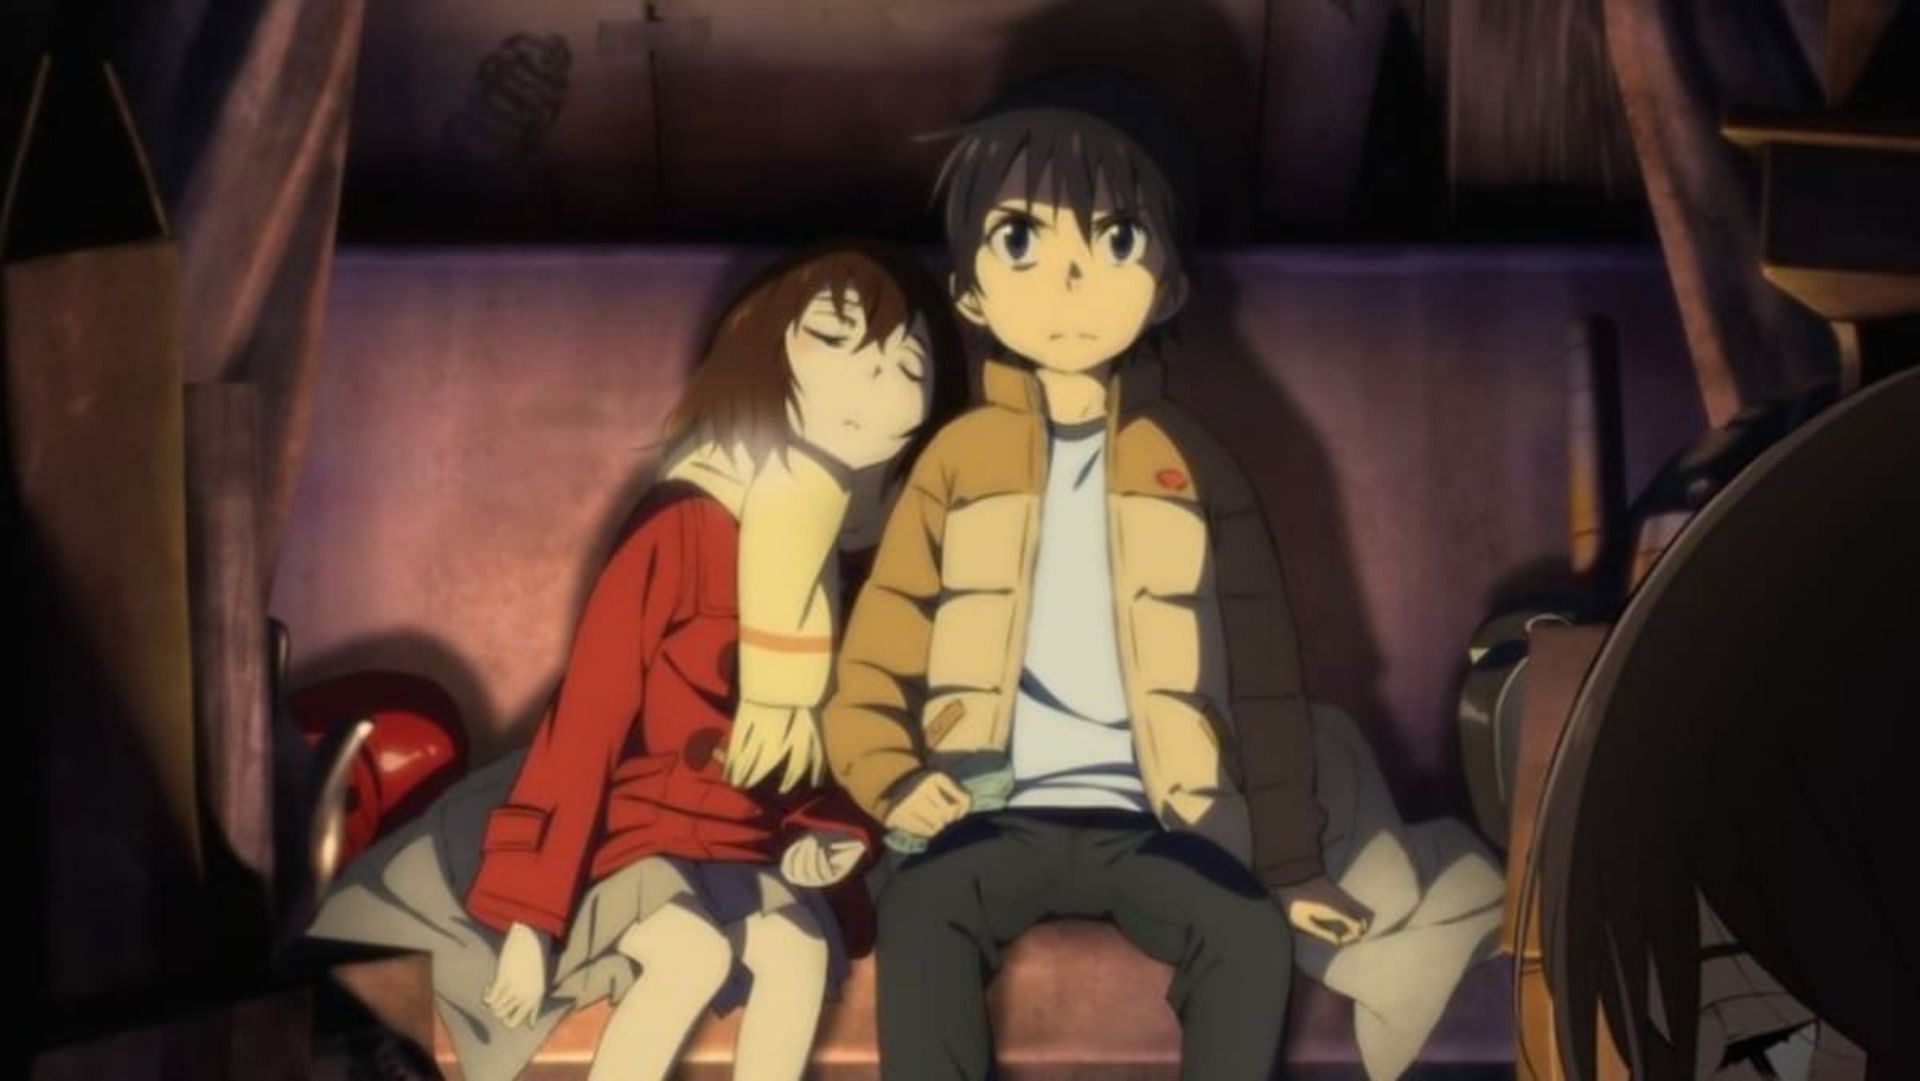 Satoru and Kayo as seen in the anime ERASED (Image credits: Kei Sanbe/ Kadokawa Shoten/ A-1 Pictures)